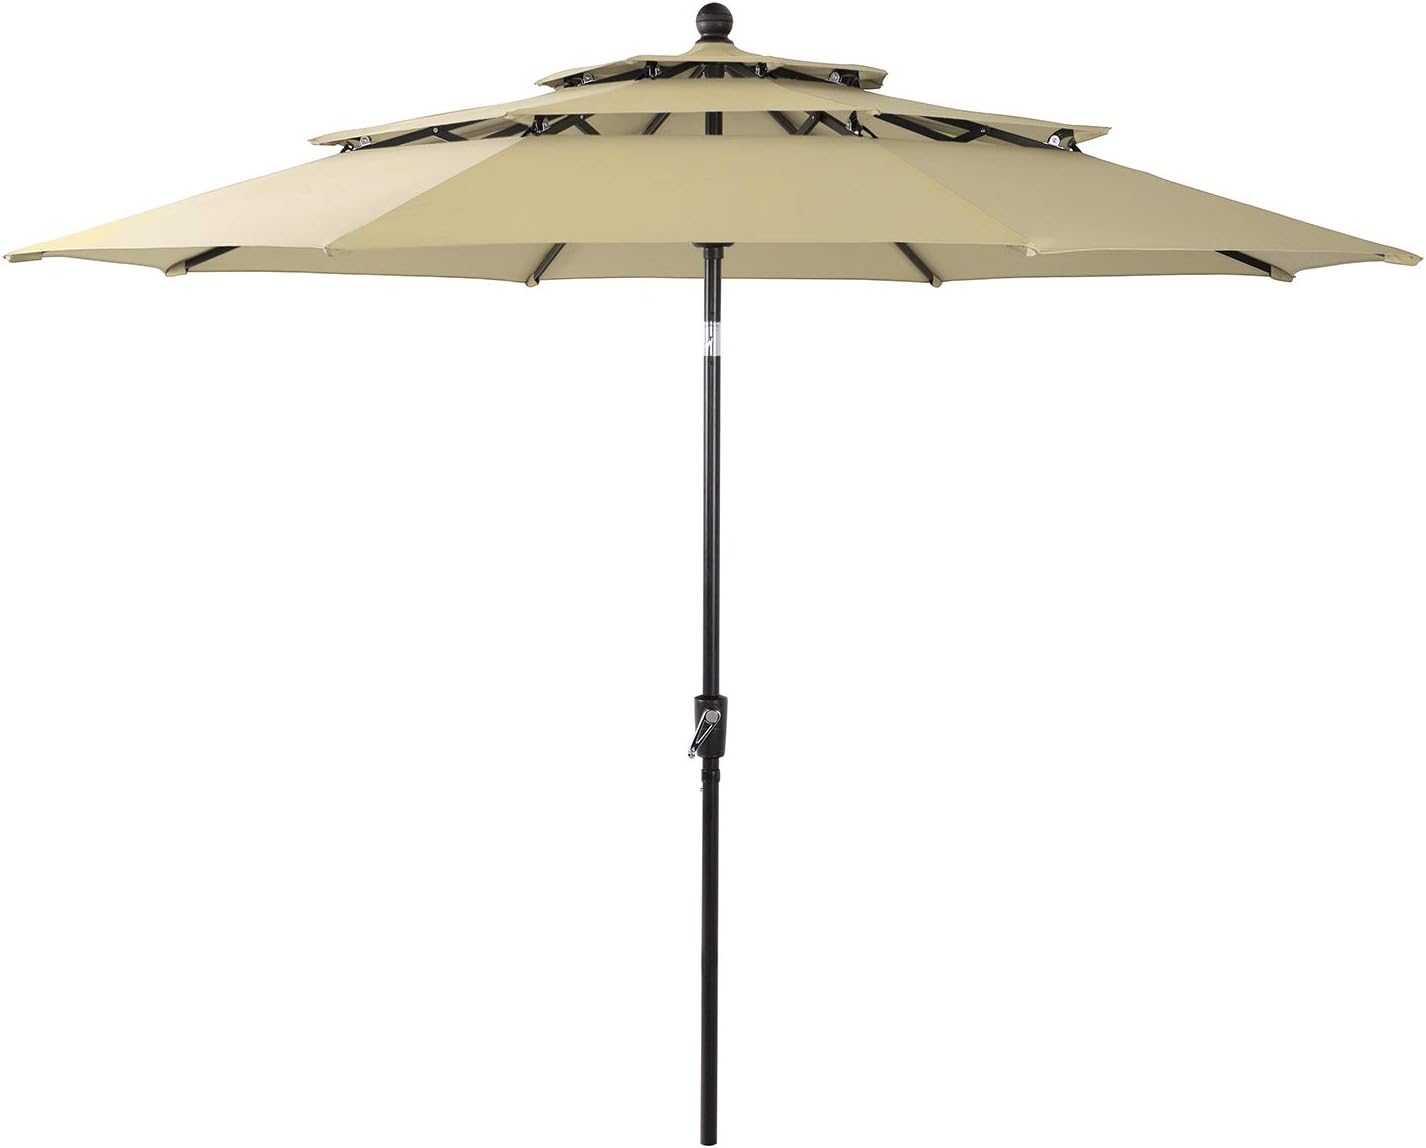 PHI VILLA 10ft 3 Tier Patio Umbrella, Outdoor Market Table Sun Shade Umbrellas for Backyard Deck Poolside, Auto-tilt